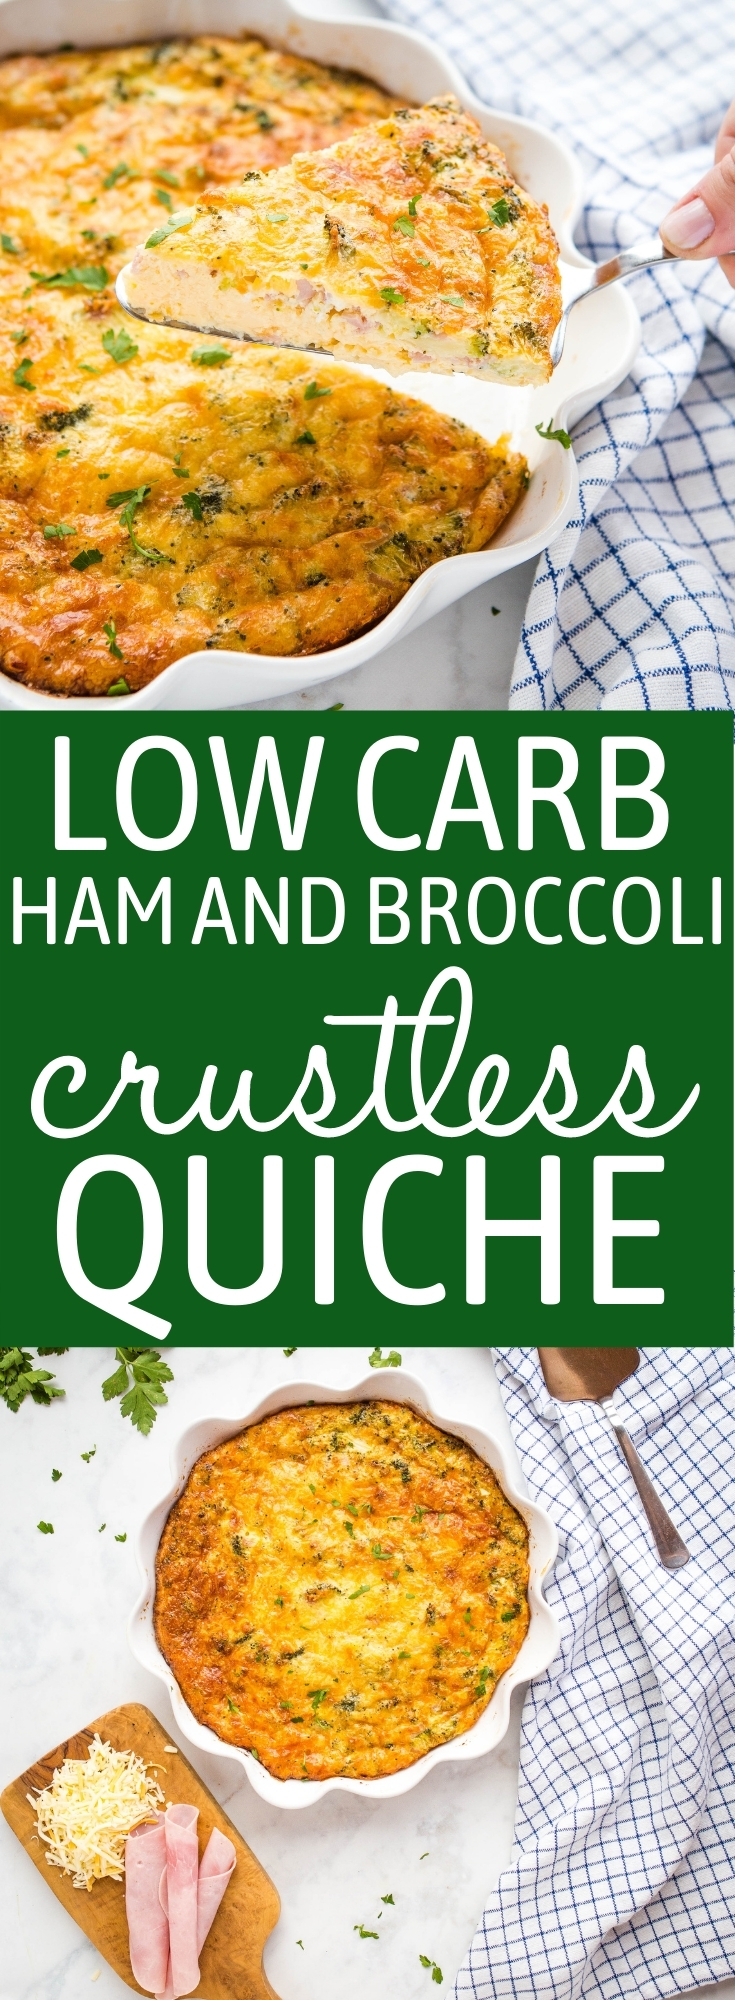 Low Carb Ham and Broccoli Crustless Quiche Recipe Pinterest